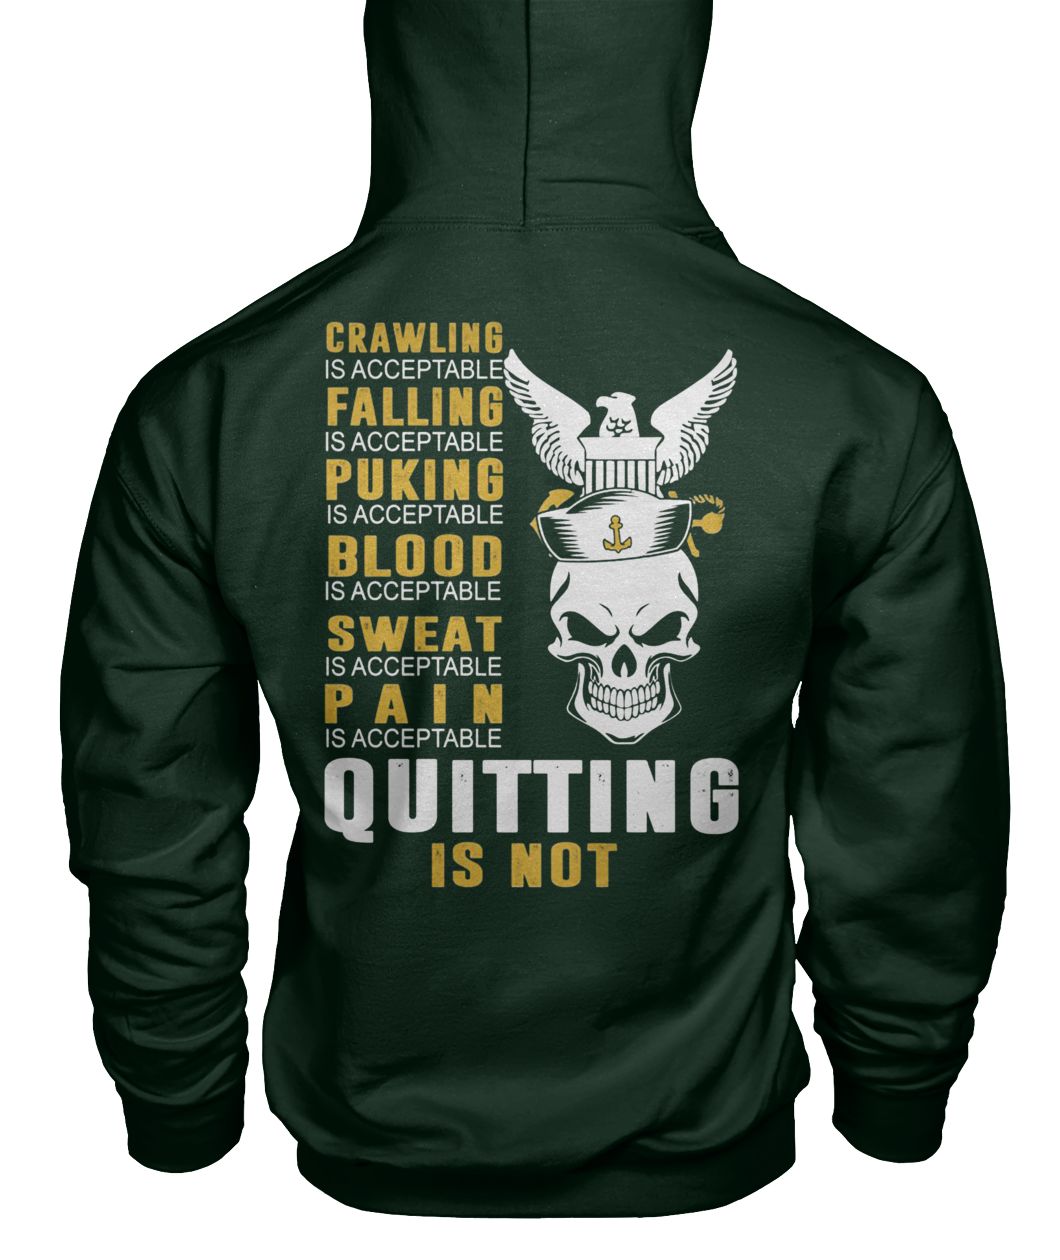 U.S. Navy Crawling is acceptable falling is acceptable puking is acceptable blood is acceptable sweat is acceptable gildan hoodie